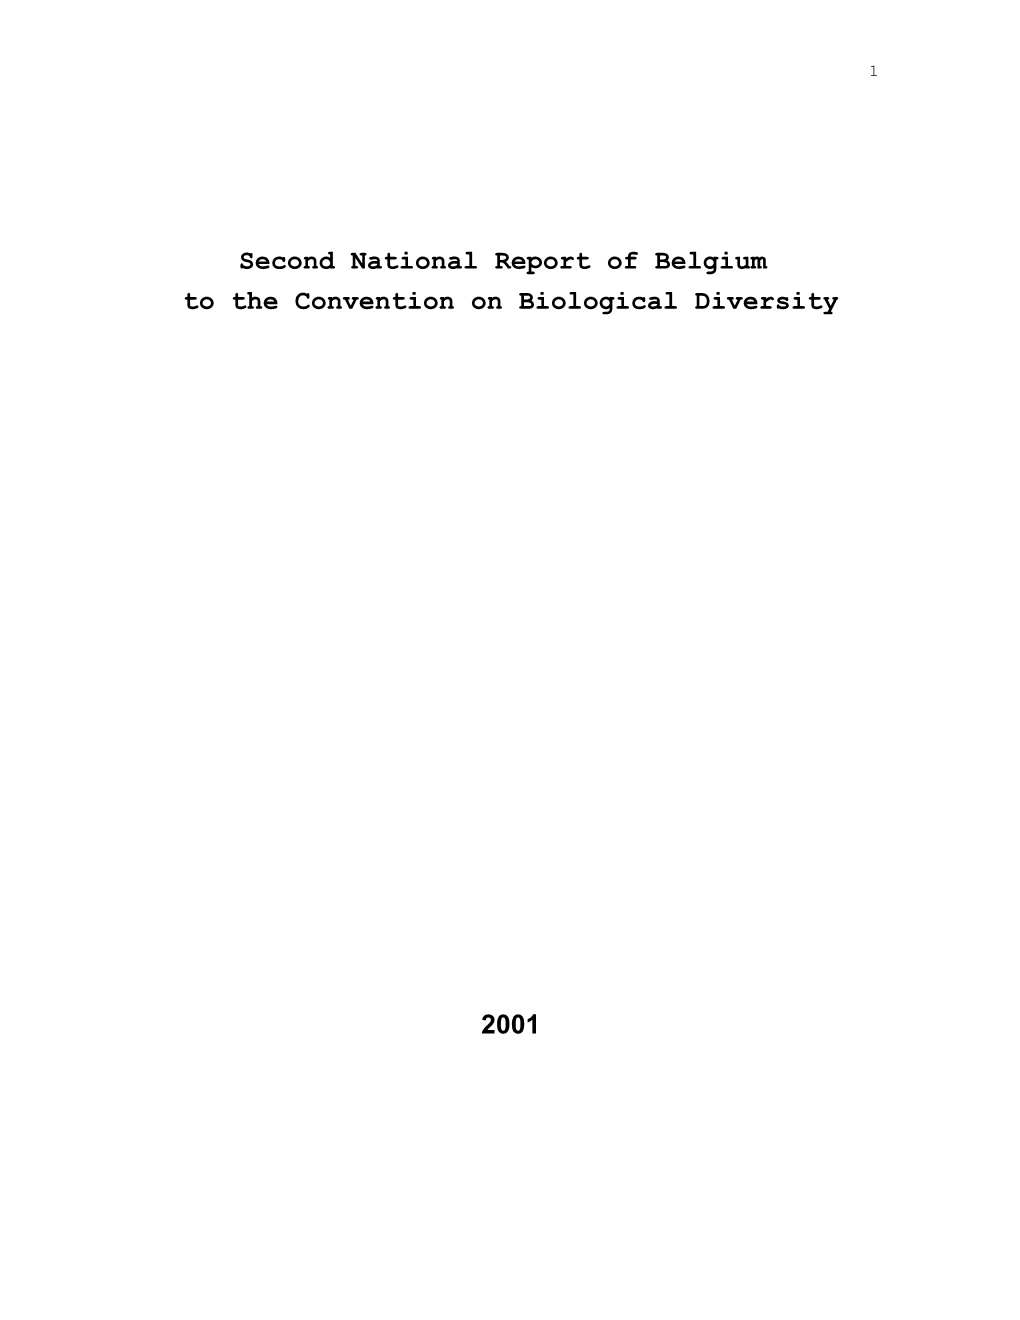 CBD Second National Report - Belgium (English Version)